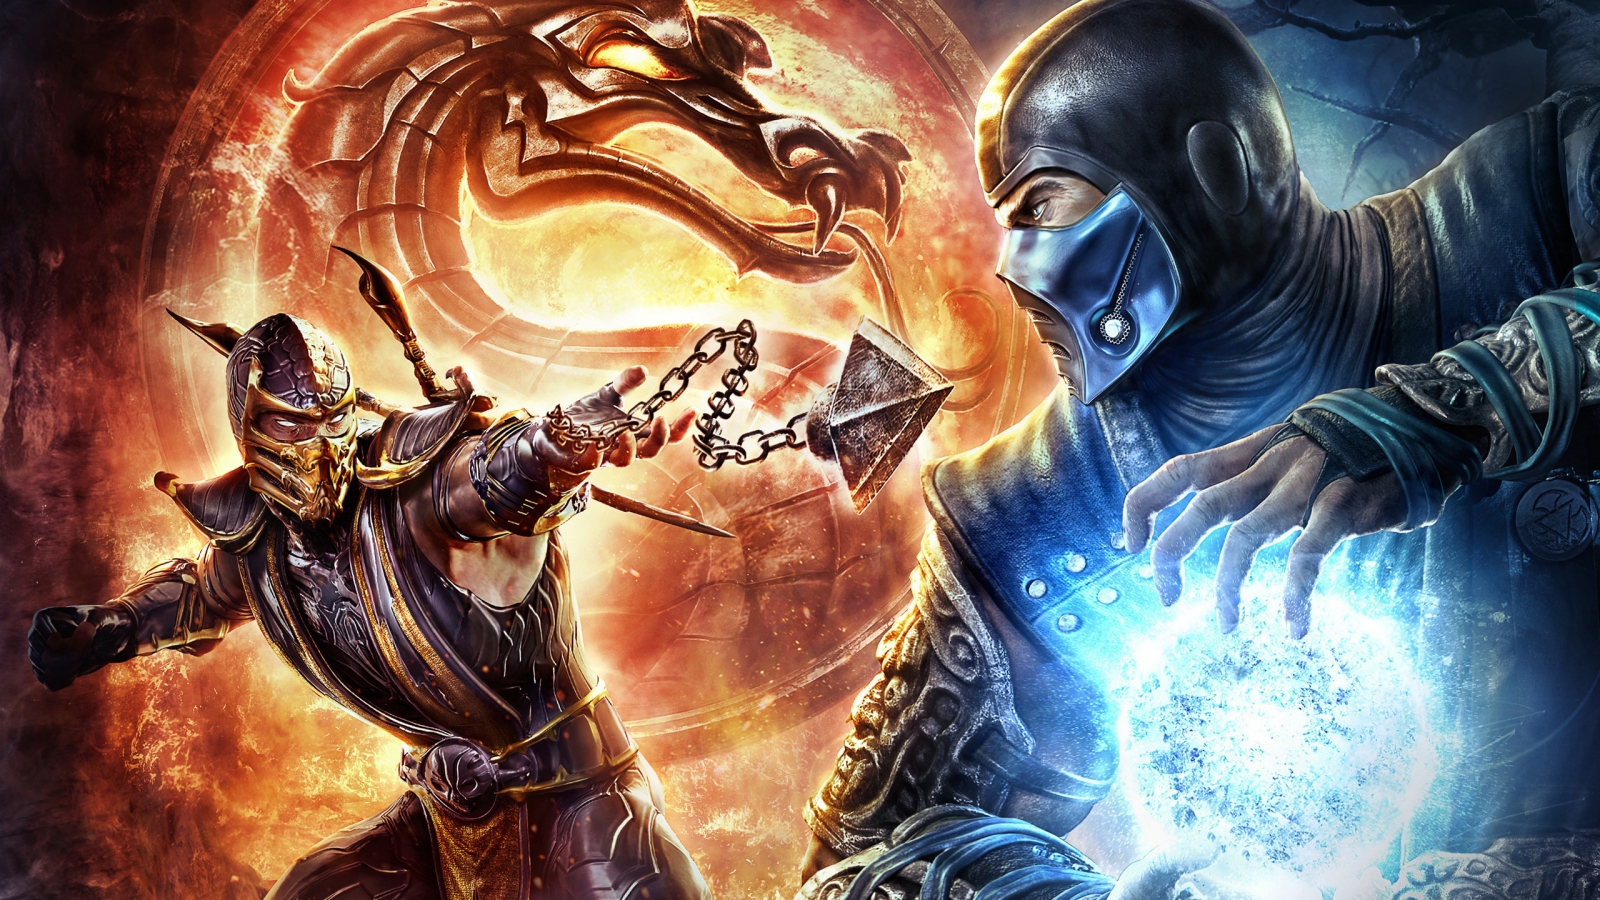 Scorpions vs Sub Zero Mortal Kombat for 1600 x 900 HDTV resolution